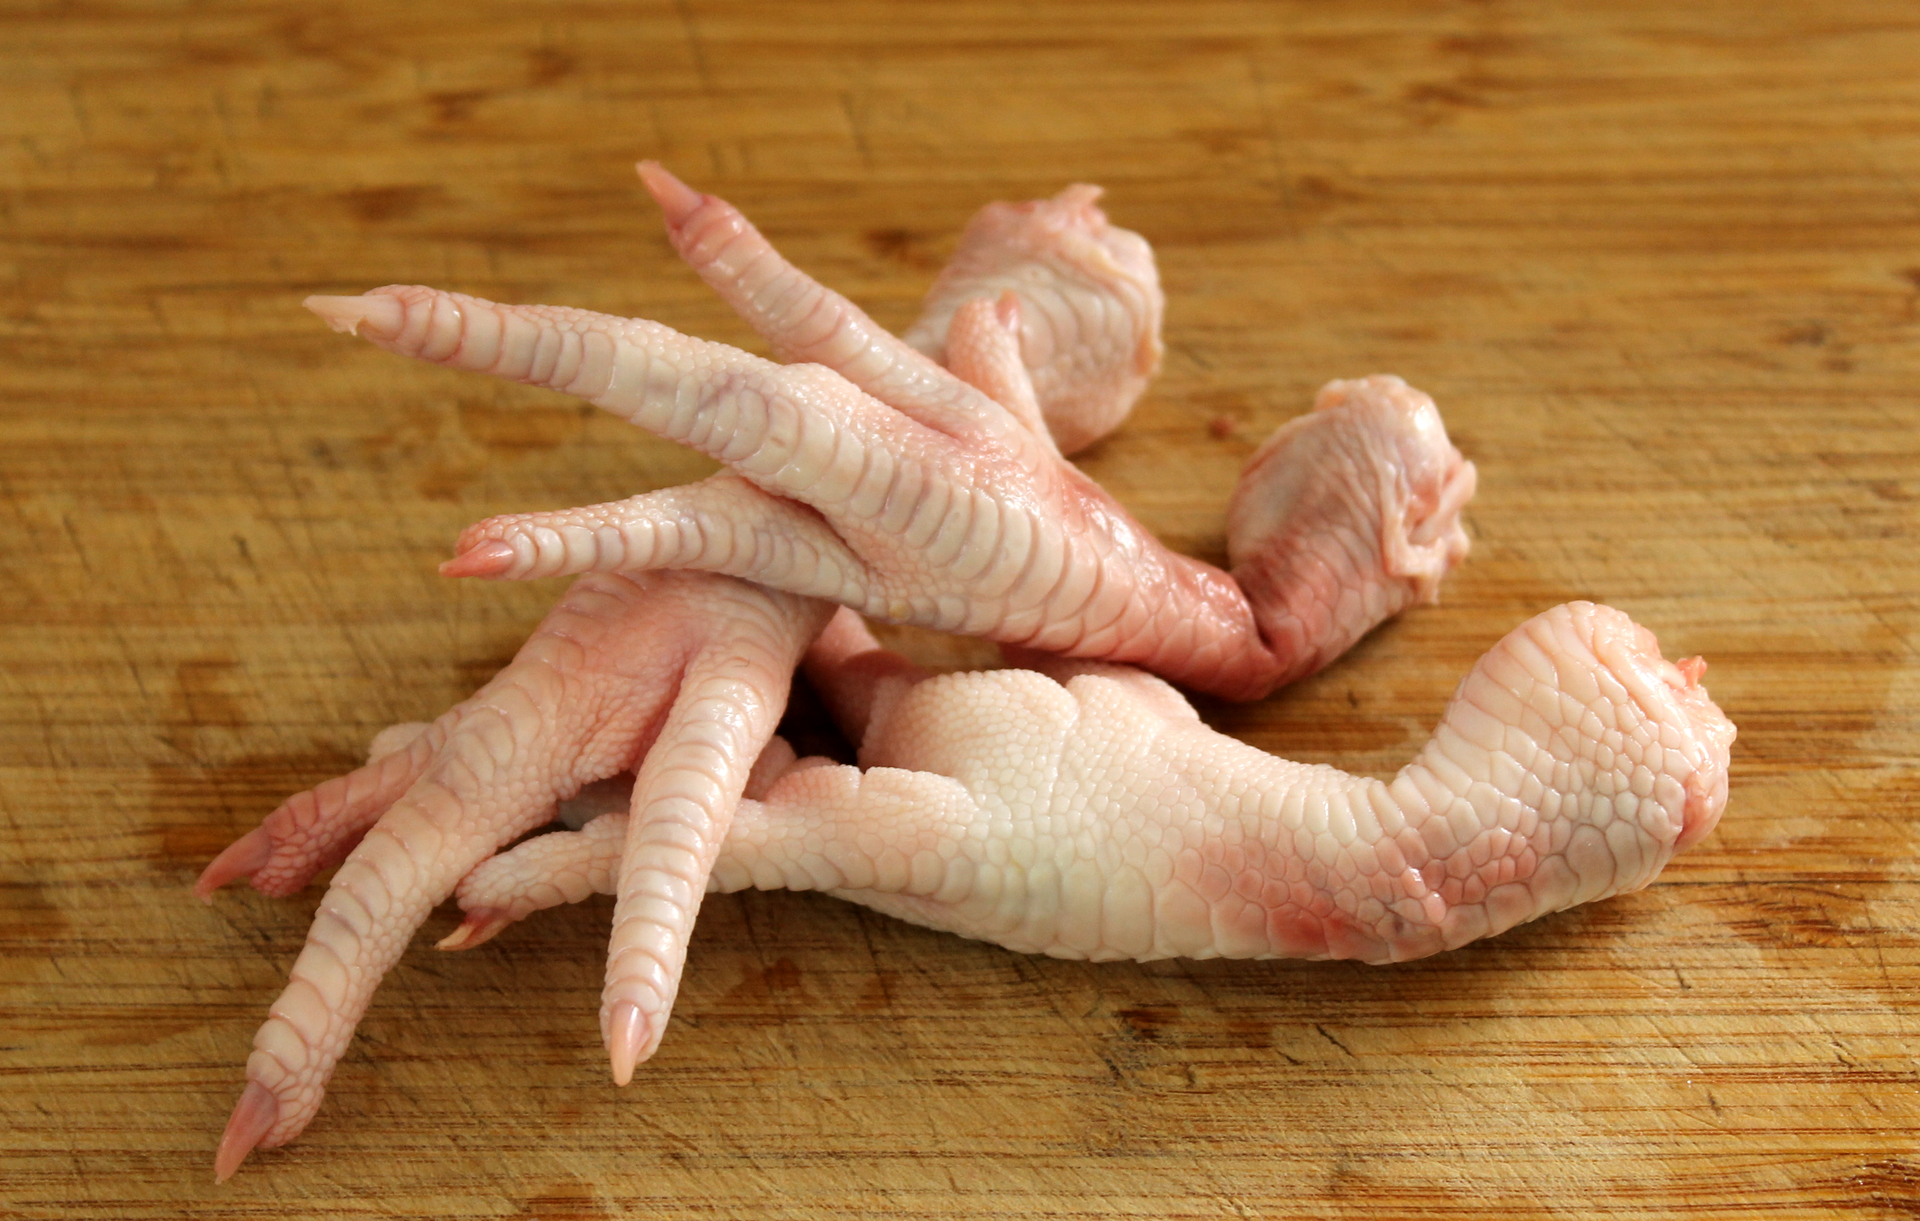 Chicken feet add additional gelatin and collagen to the broth.